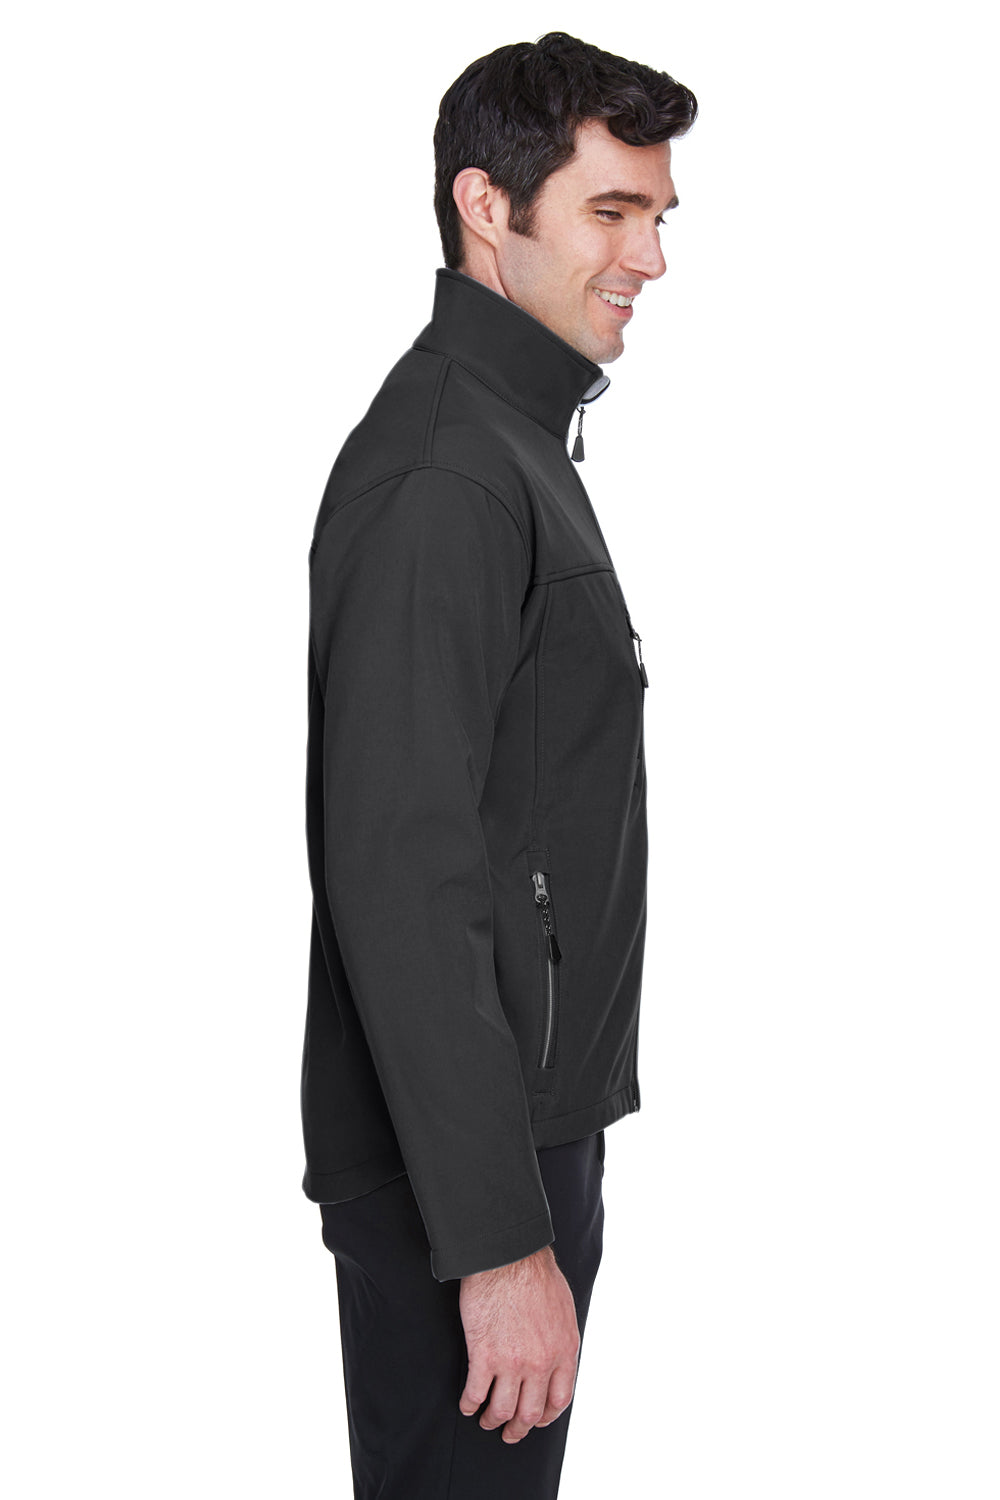 Devon & Jones D995 Mens Wind & Water Resistant Full Zip Jacket Black Side